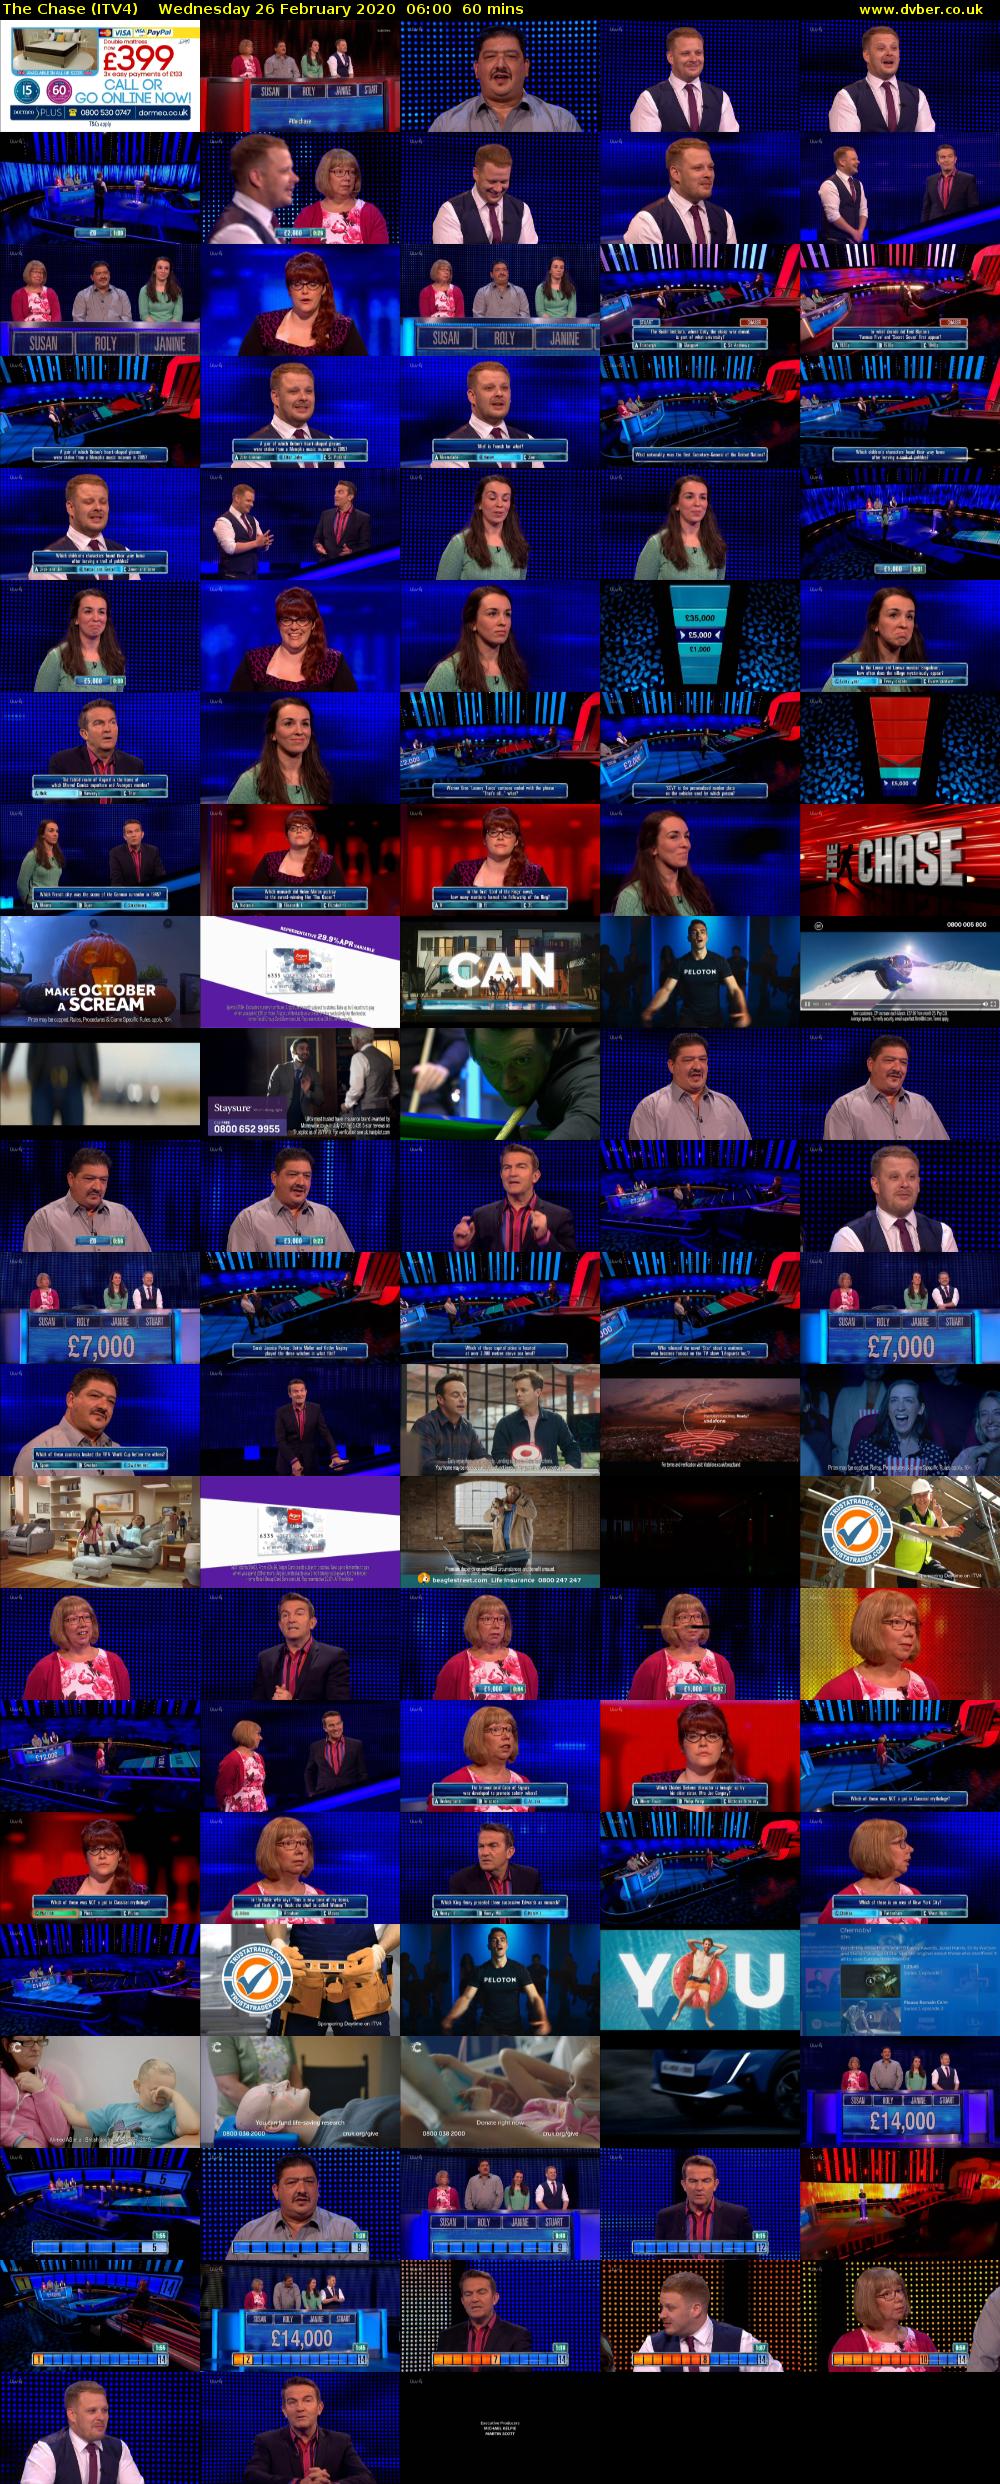 The Chase (ITV4) Wednesday 26 February 2020 06:00 - 07:00